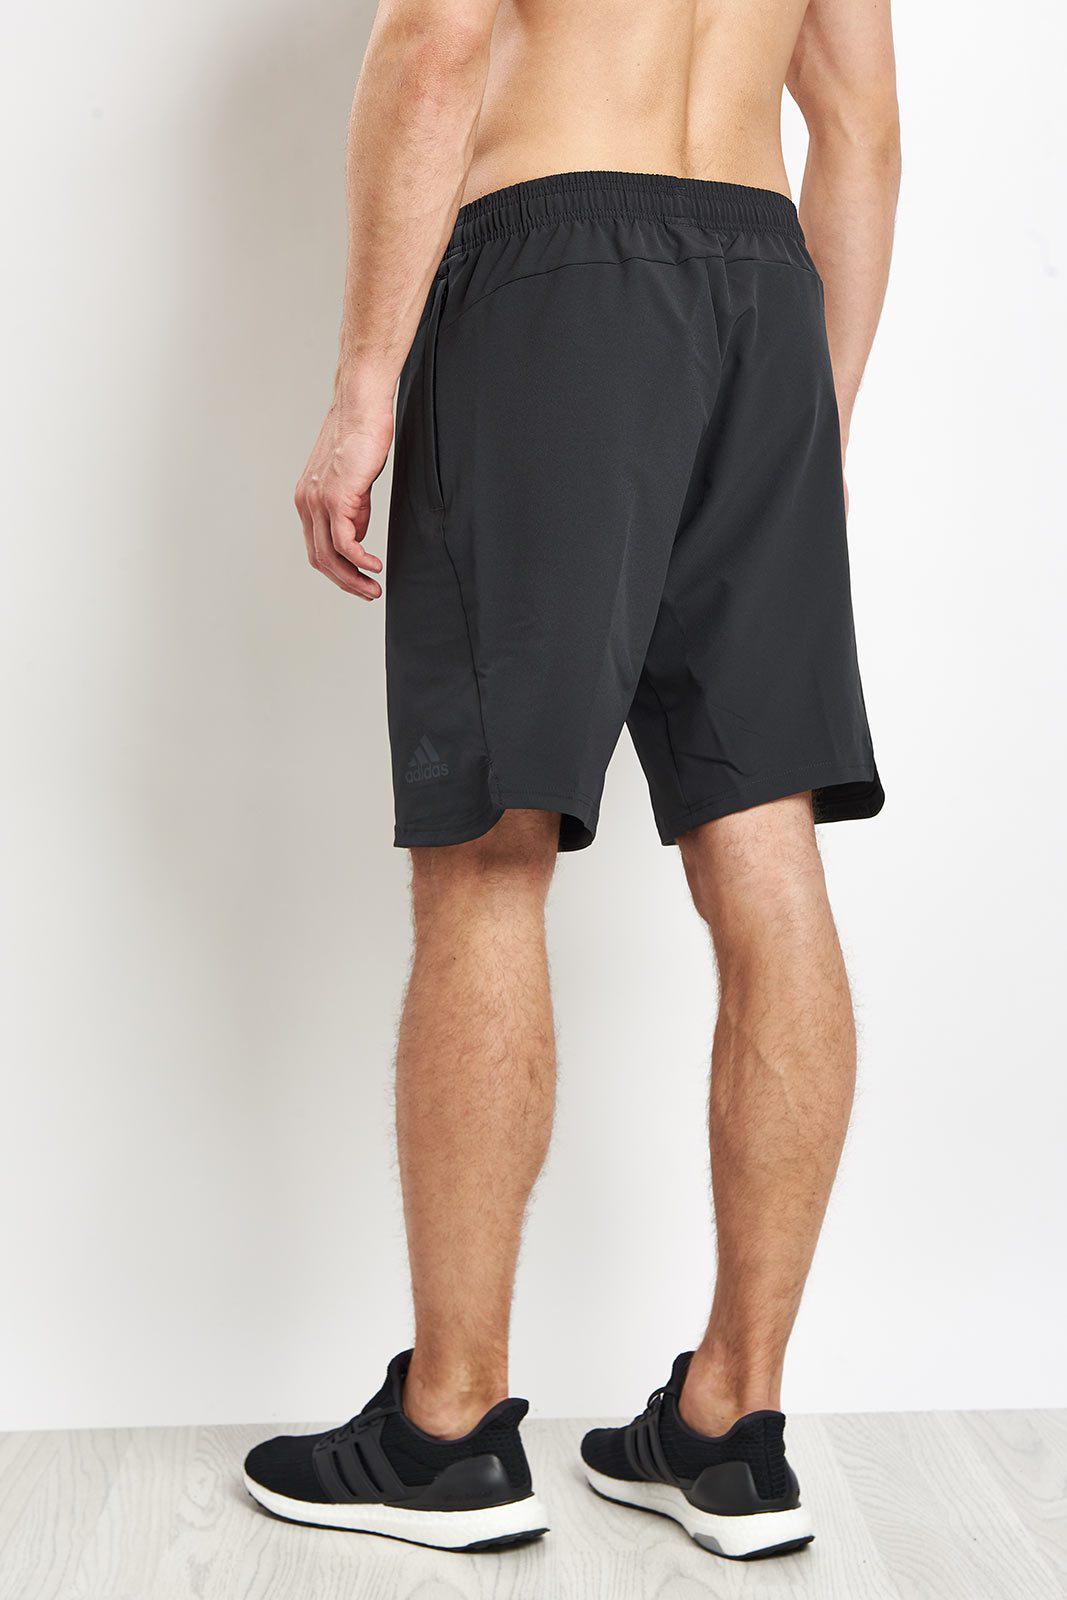 4krft elevated shorts